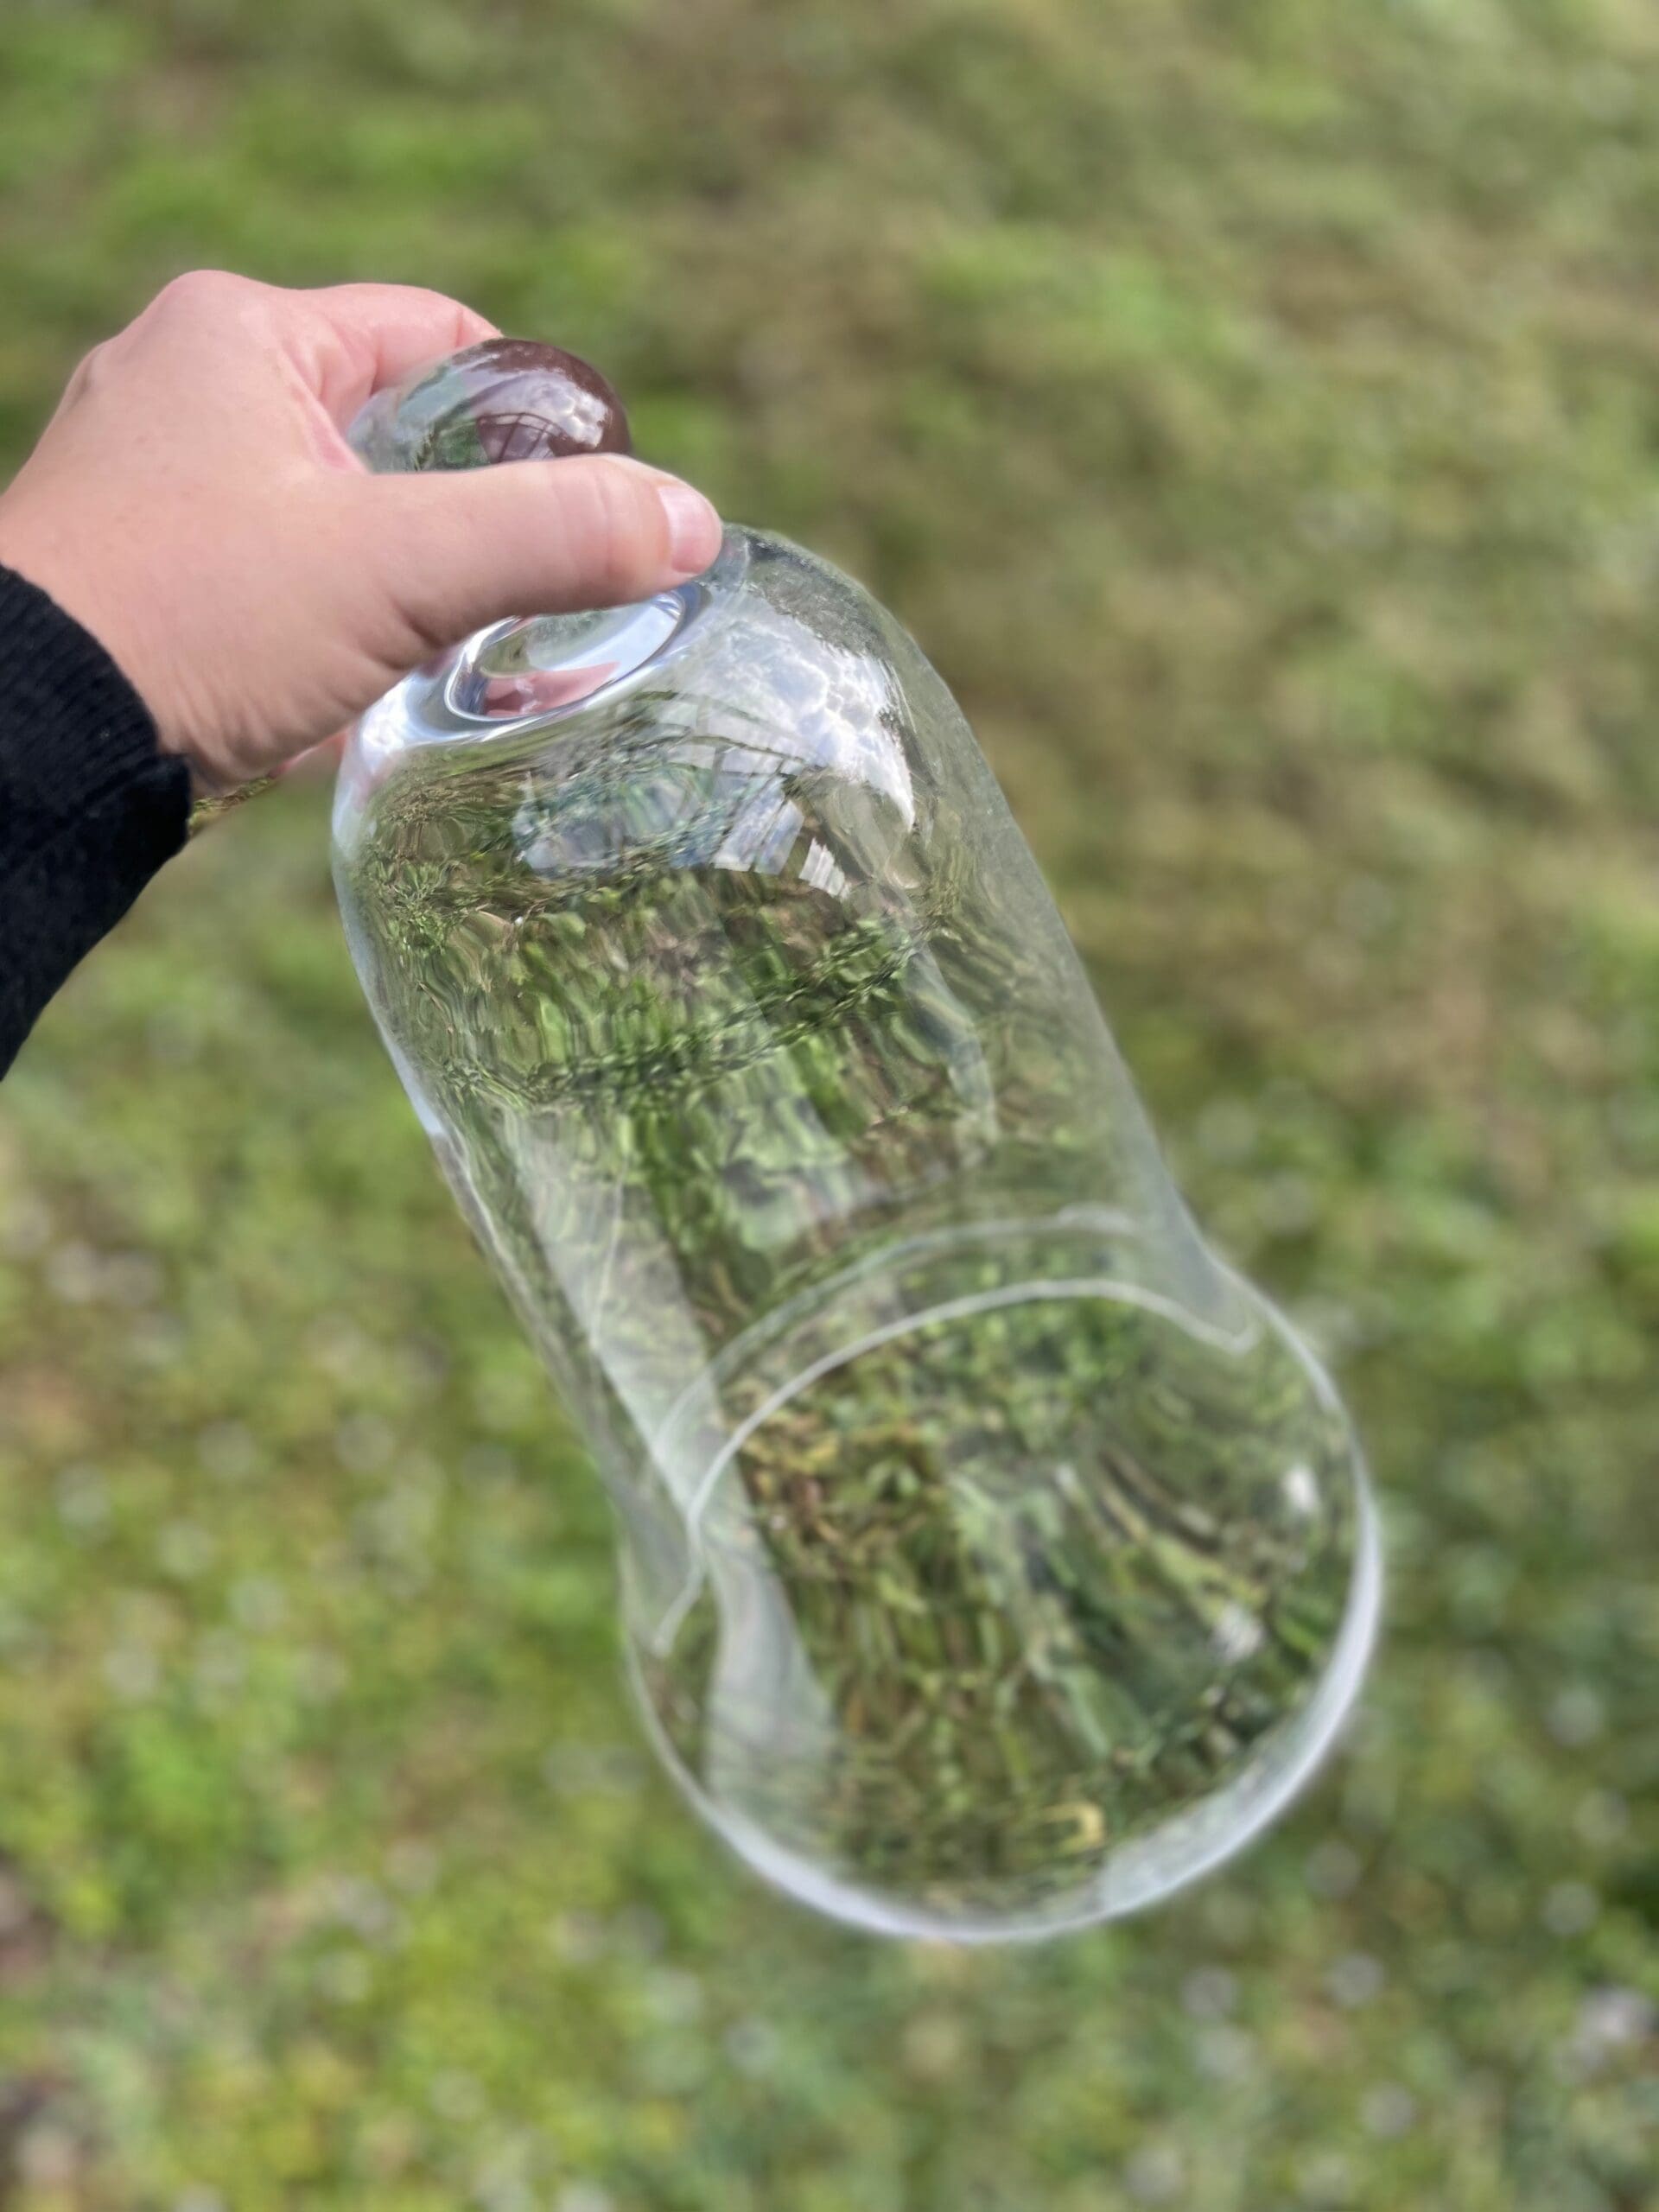 amazing glass cloche found at a yard sale